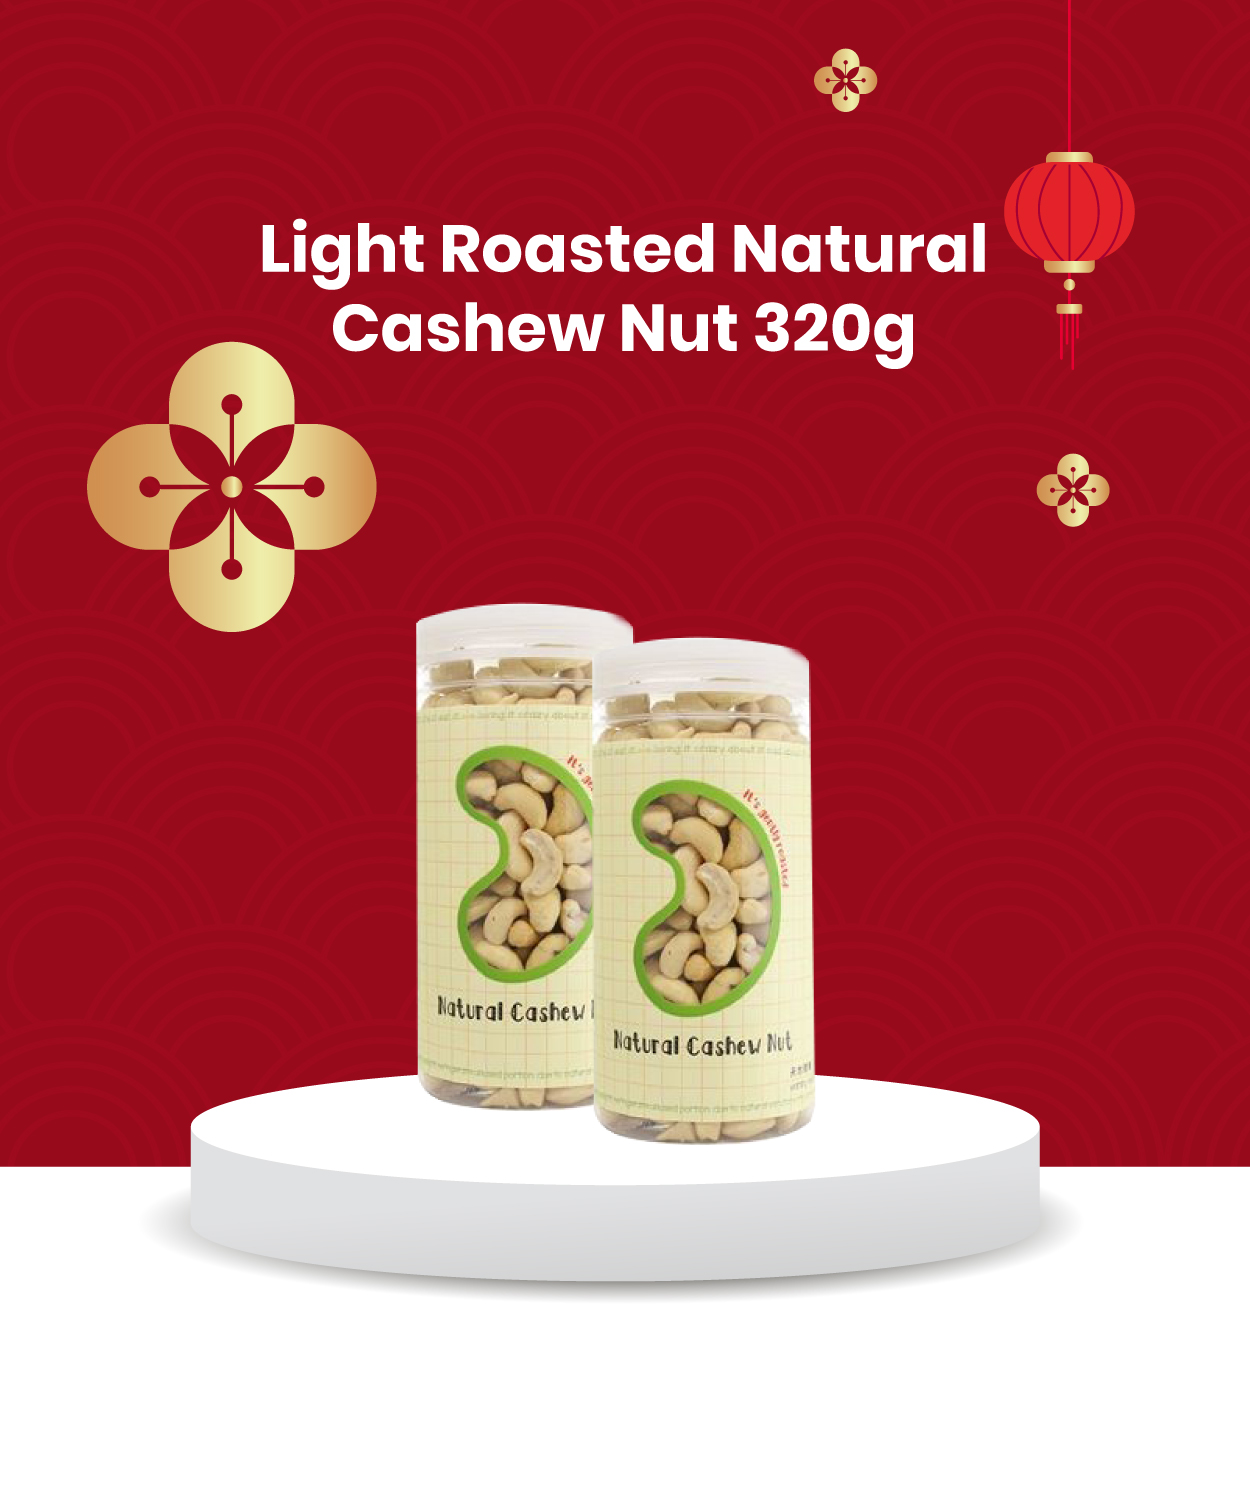 dropee-roasted-cashew-nut-packaging-cny